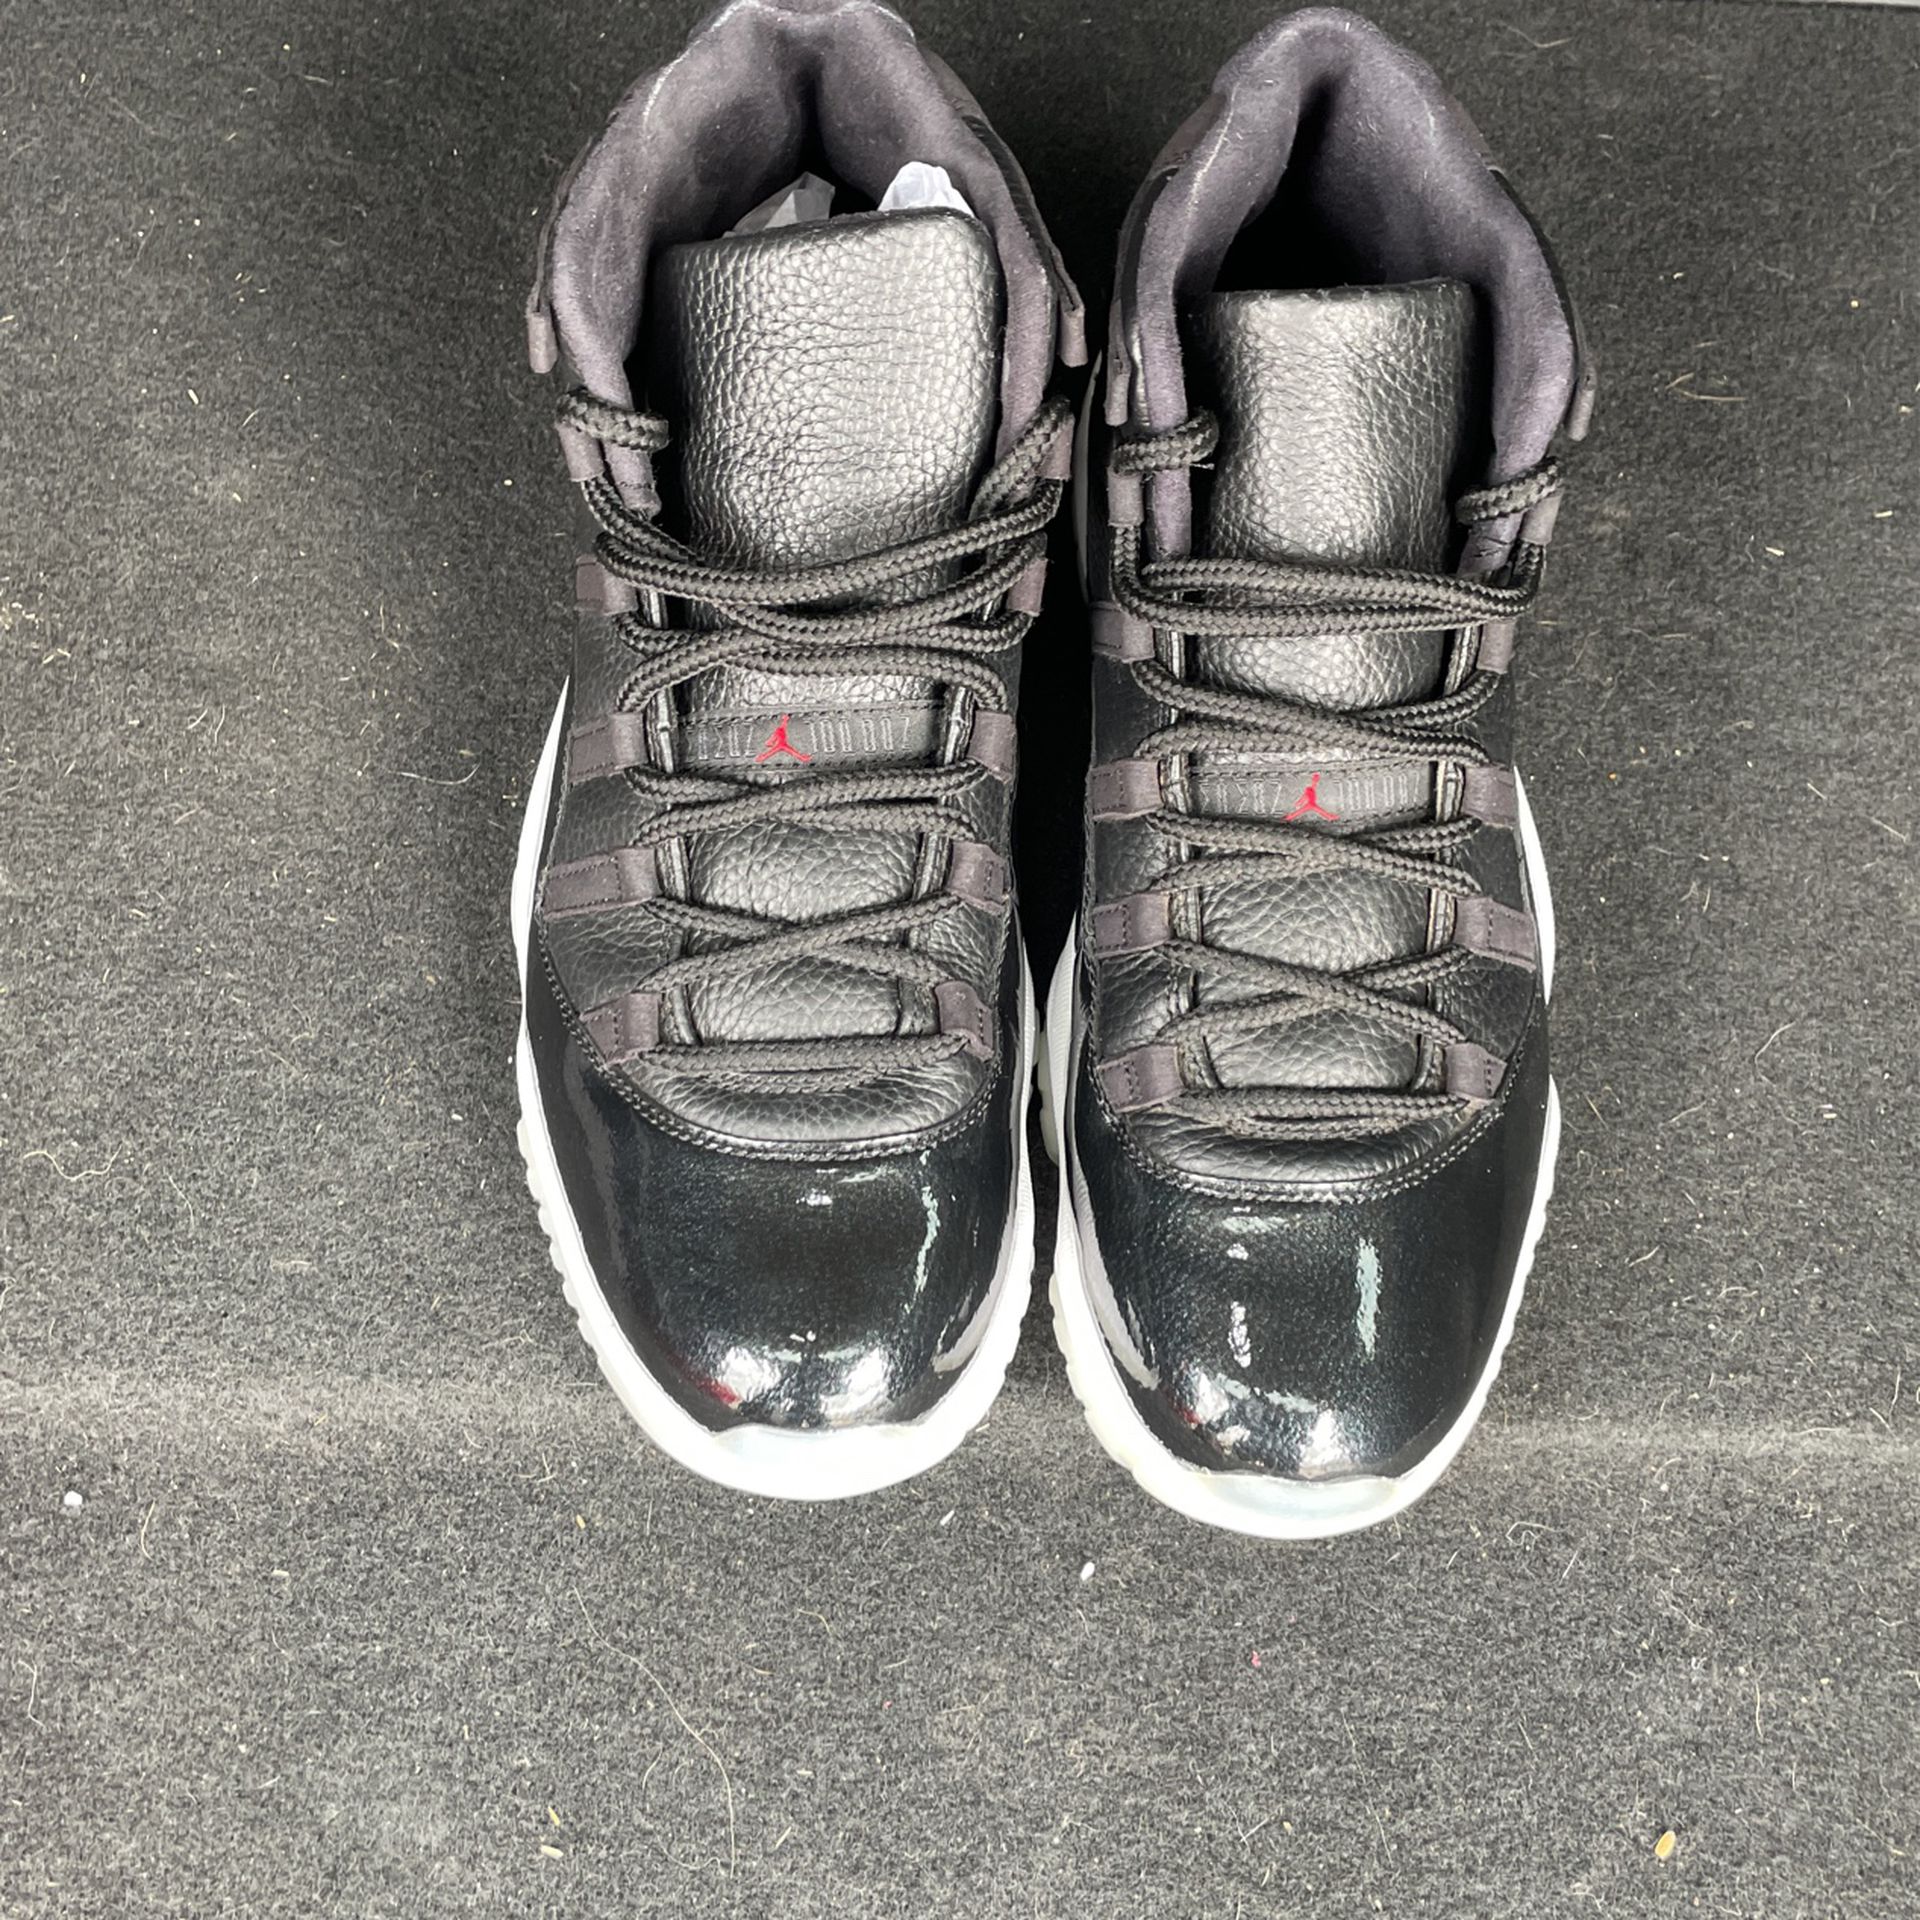 Air Jordan 11 Retro Size 11.5.